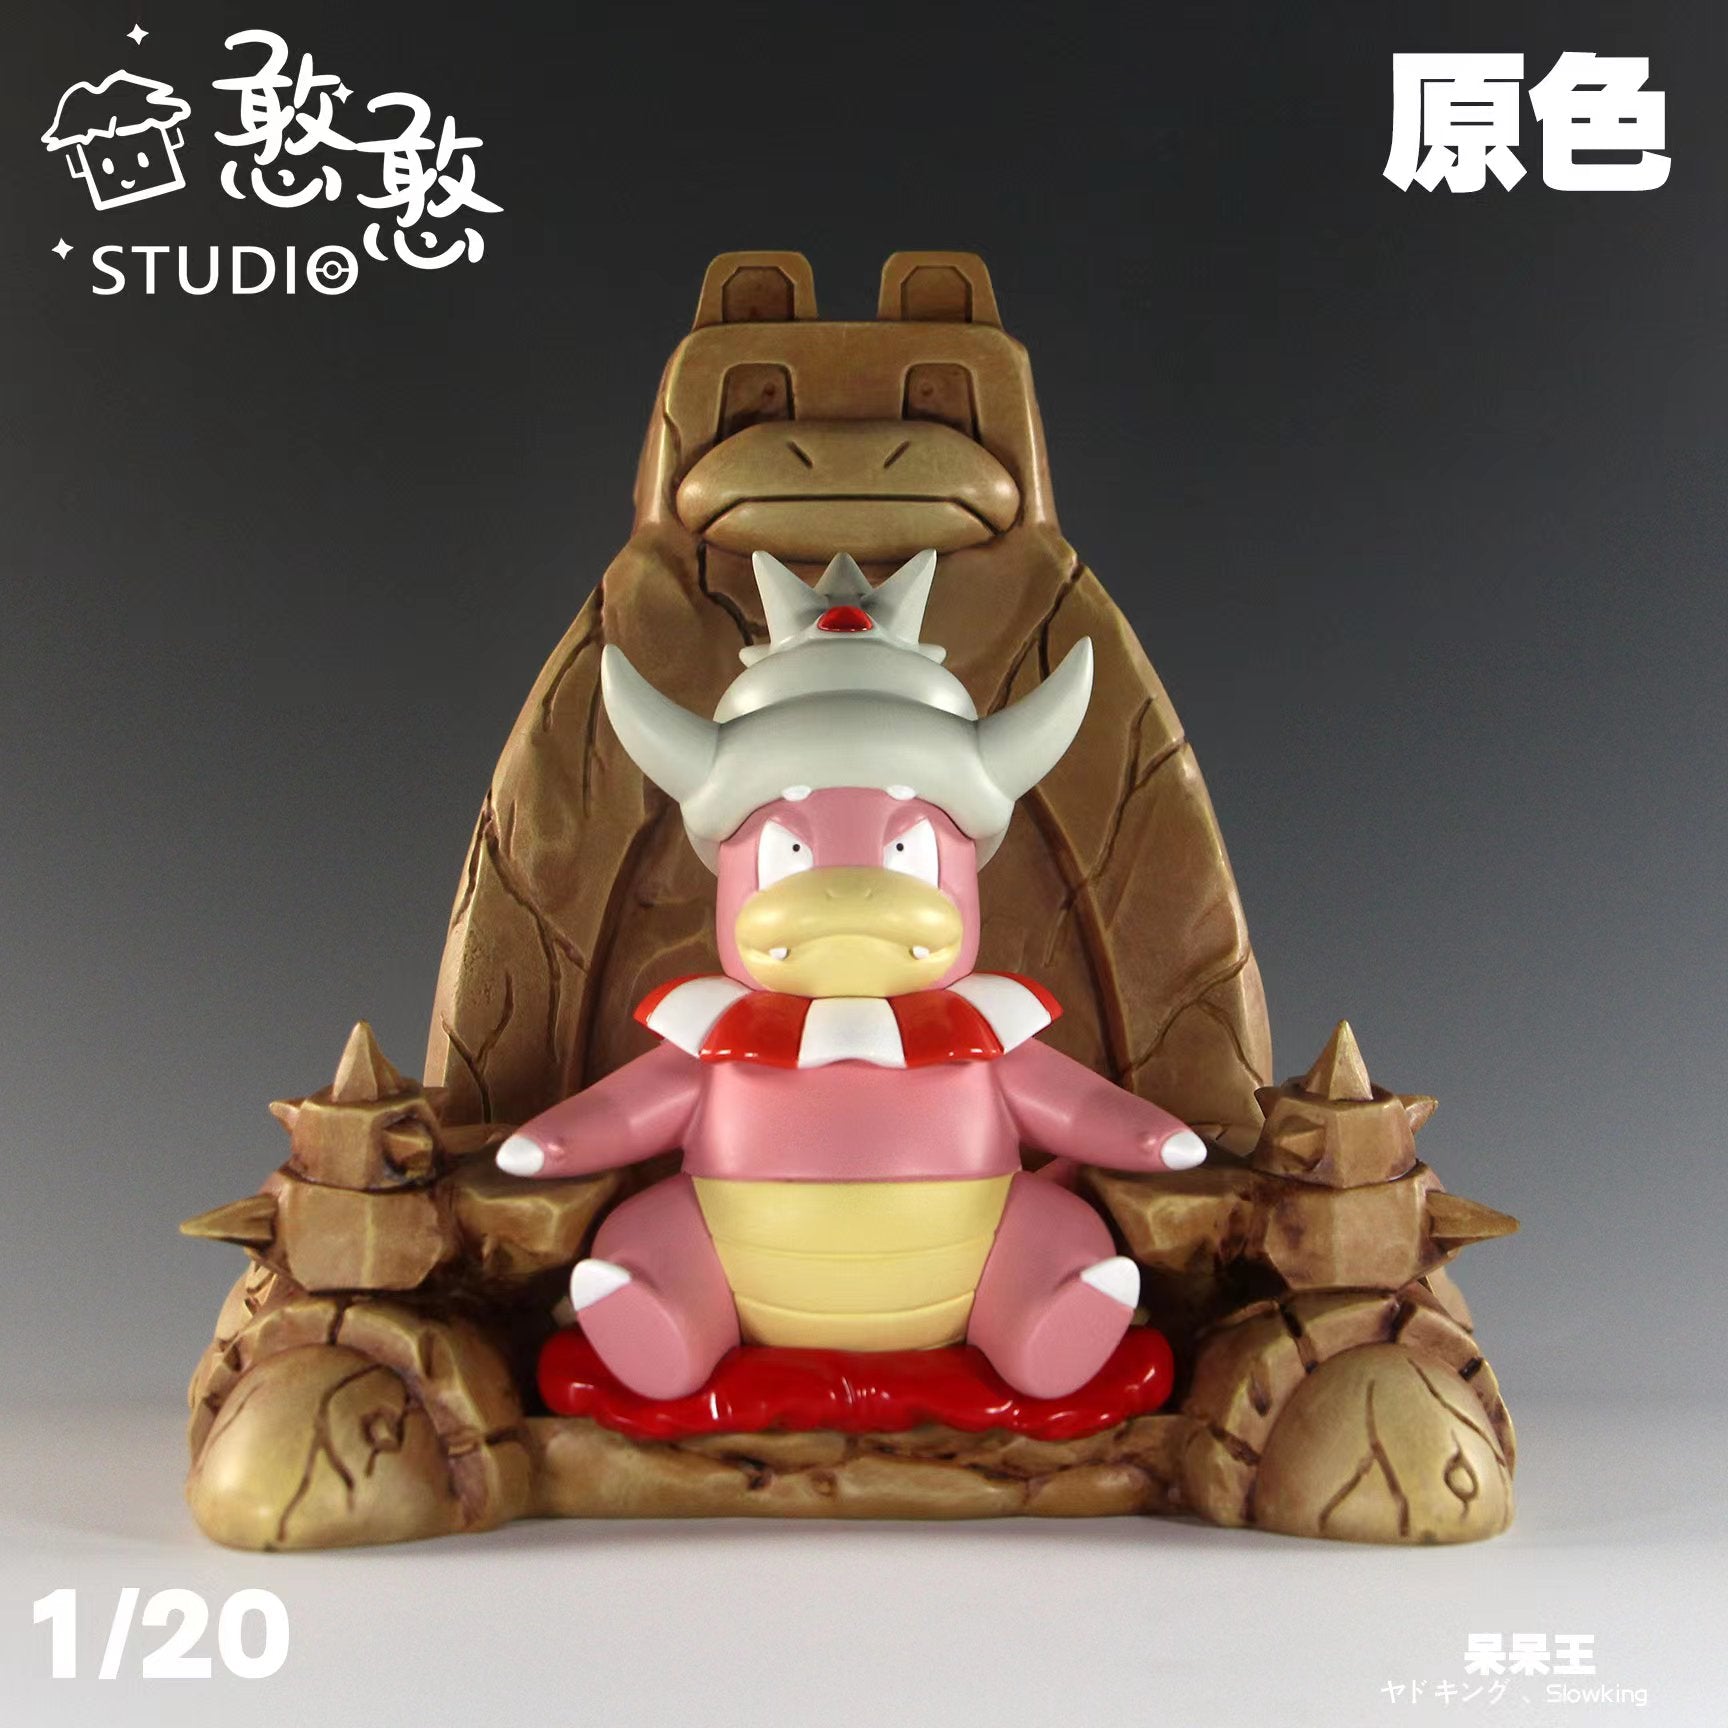 〖Make Up The Balance〗Pokemon Scale World Tapu Koko #785 1:20 - Daiki  Research Institute Studio